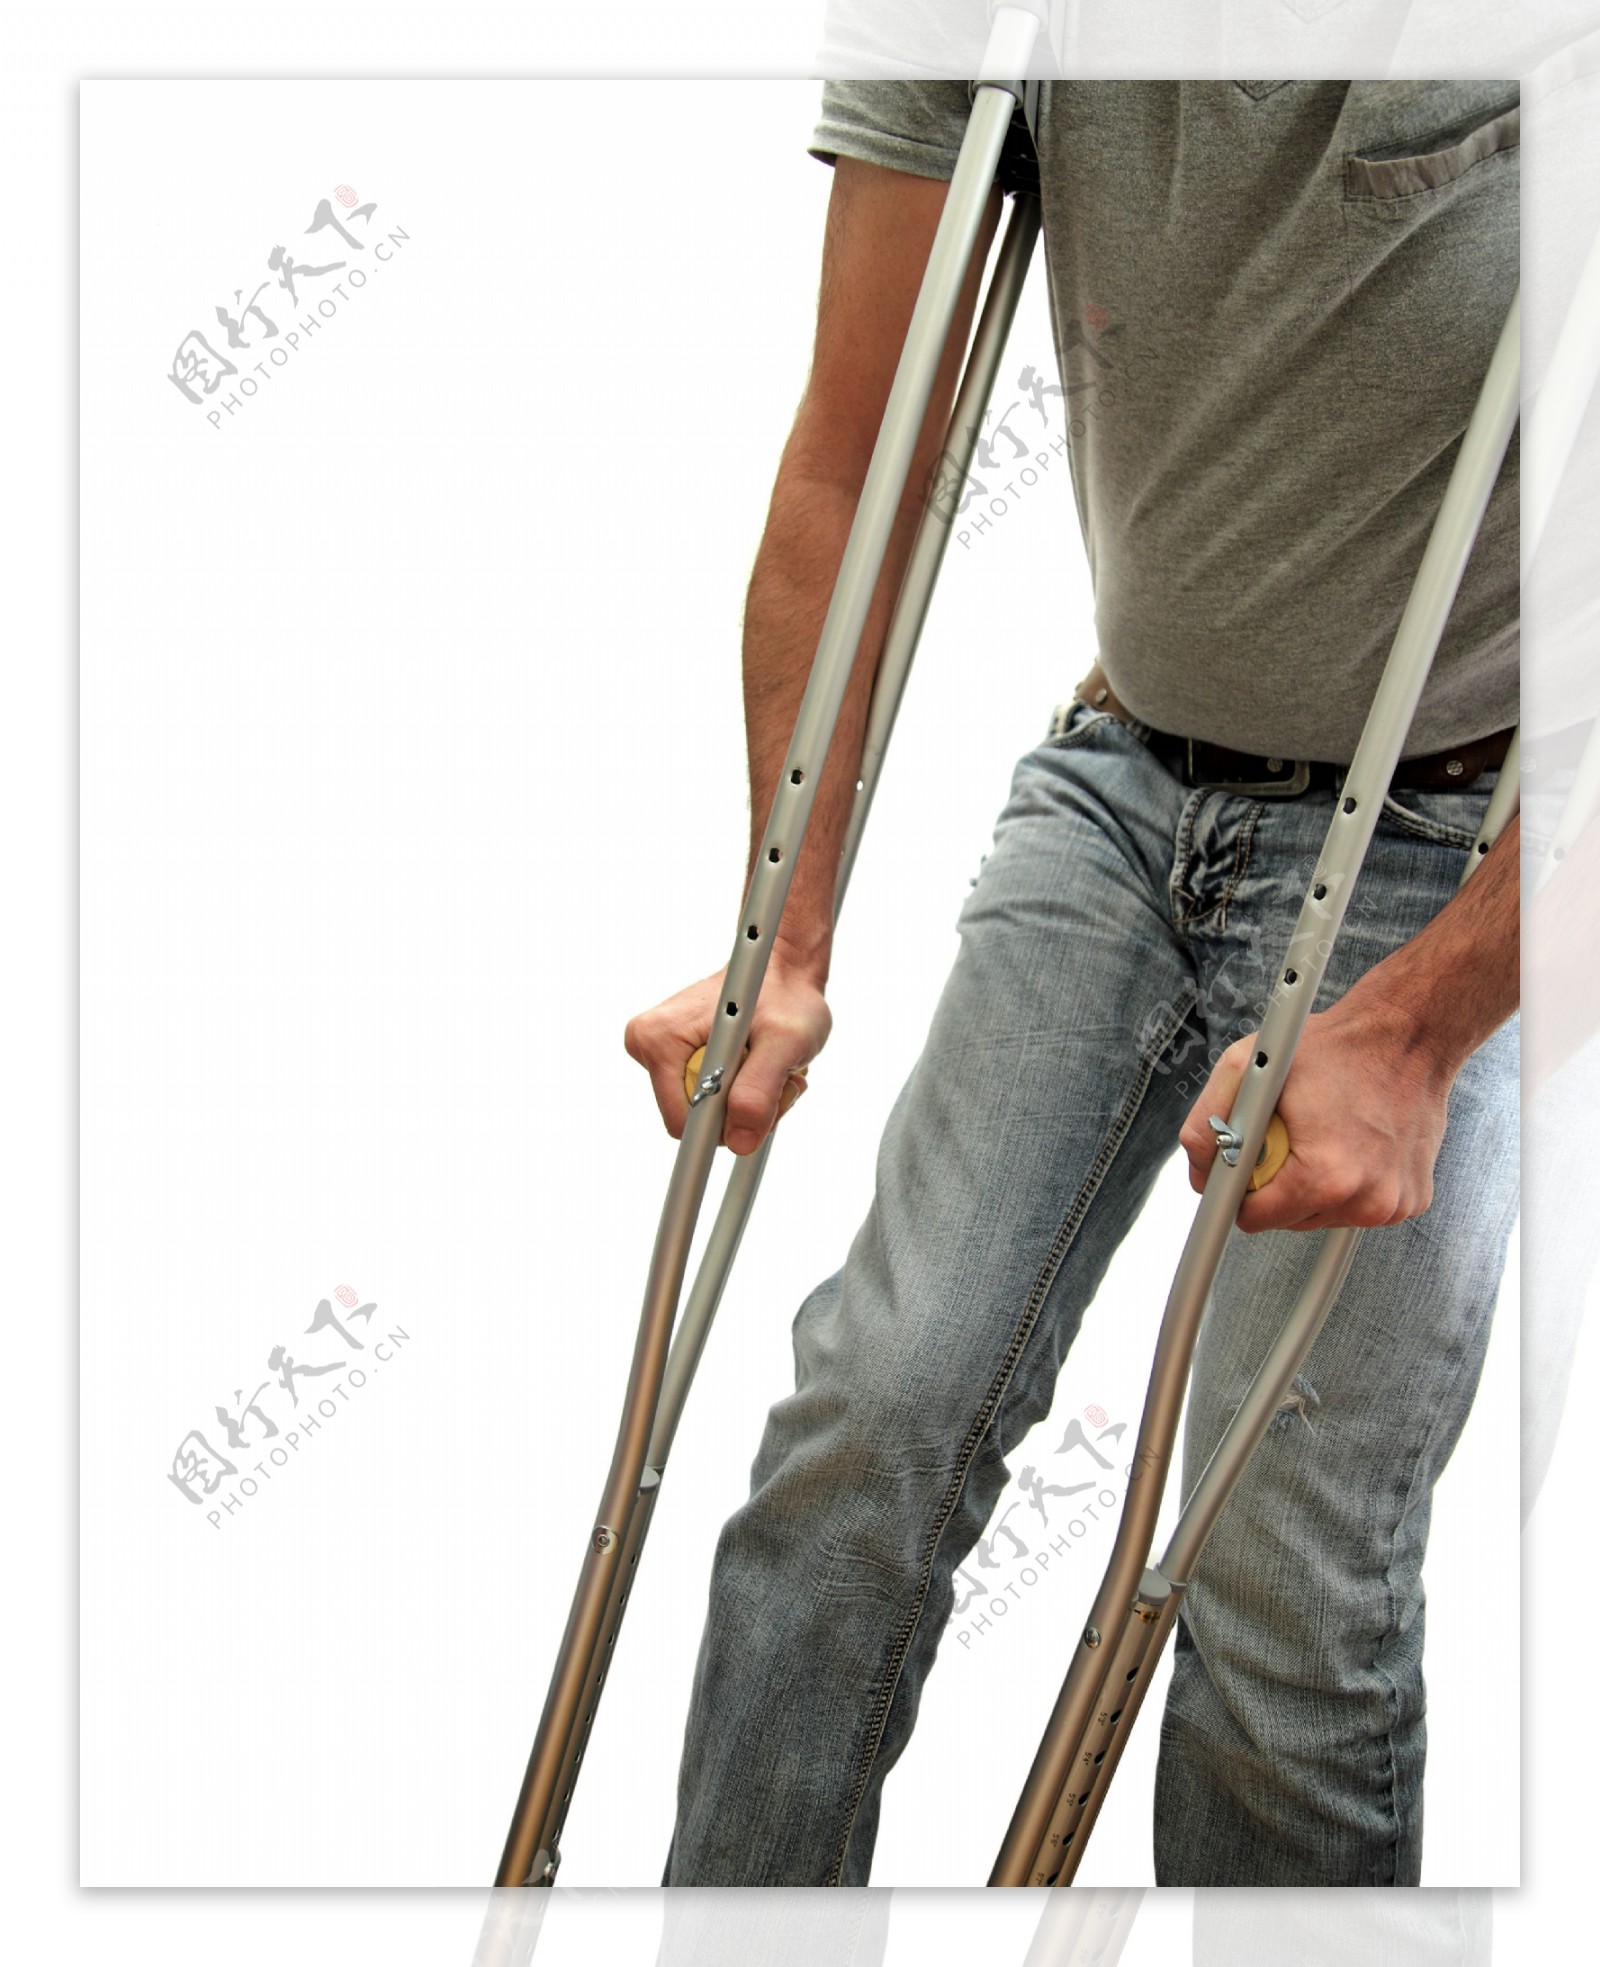 4k拄拐杖艰难行走的男人背影实拍残疾人视频特效素材-千库网